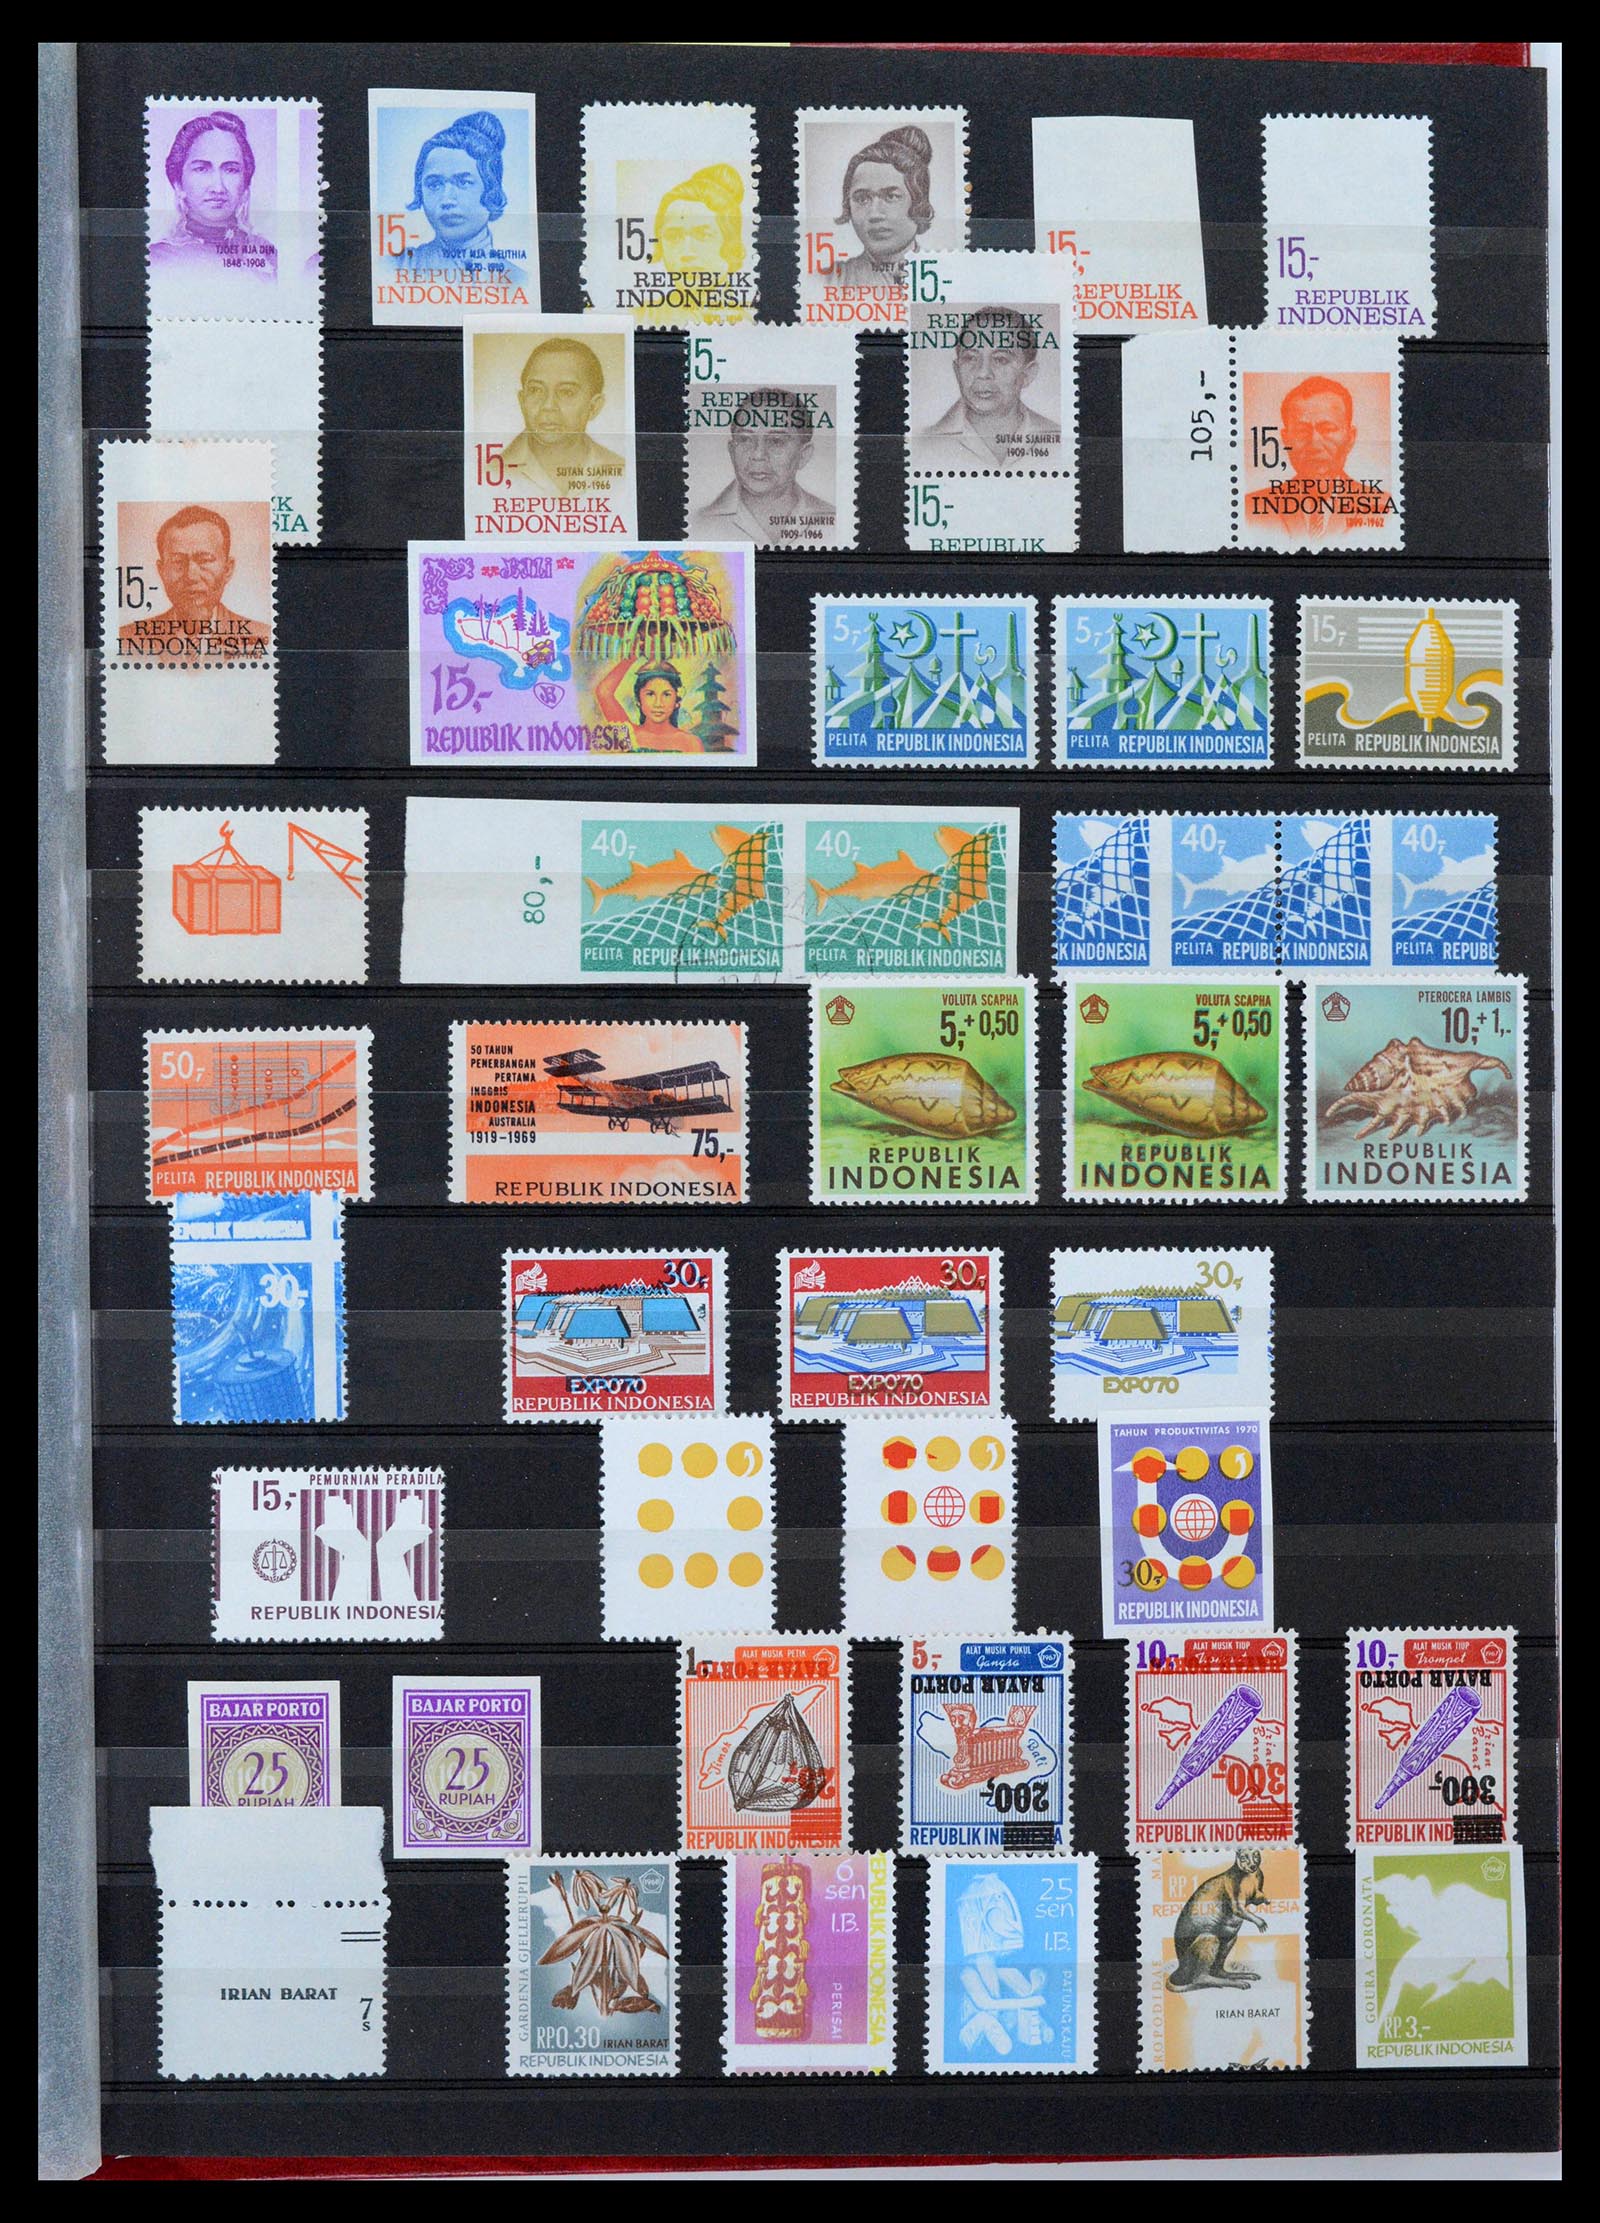 39422 0003 - Stamp collection 39422 Indonesia varieties 1945-1970.